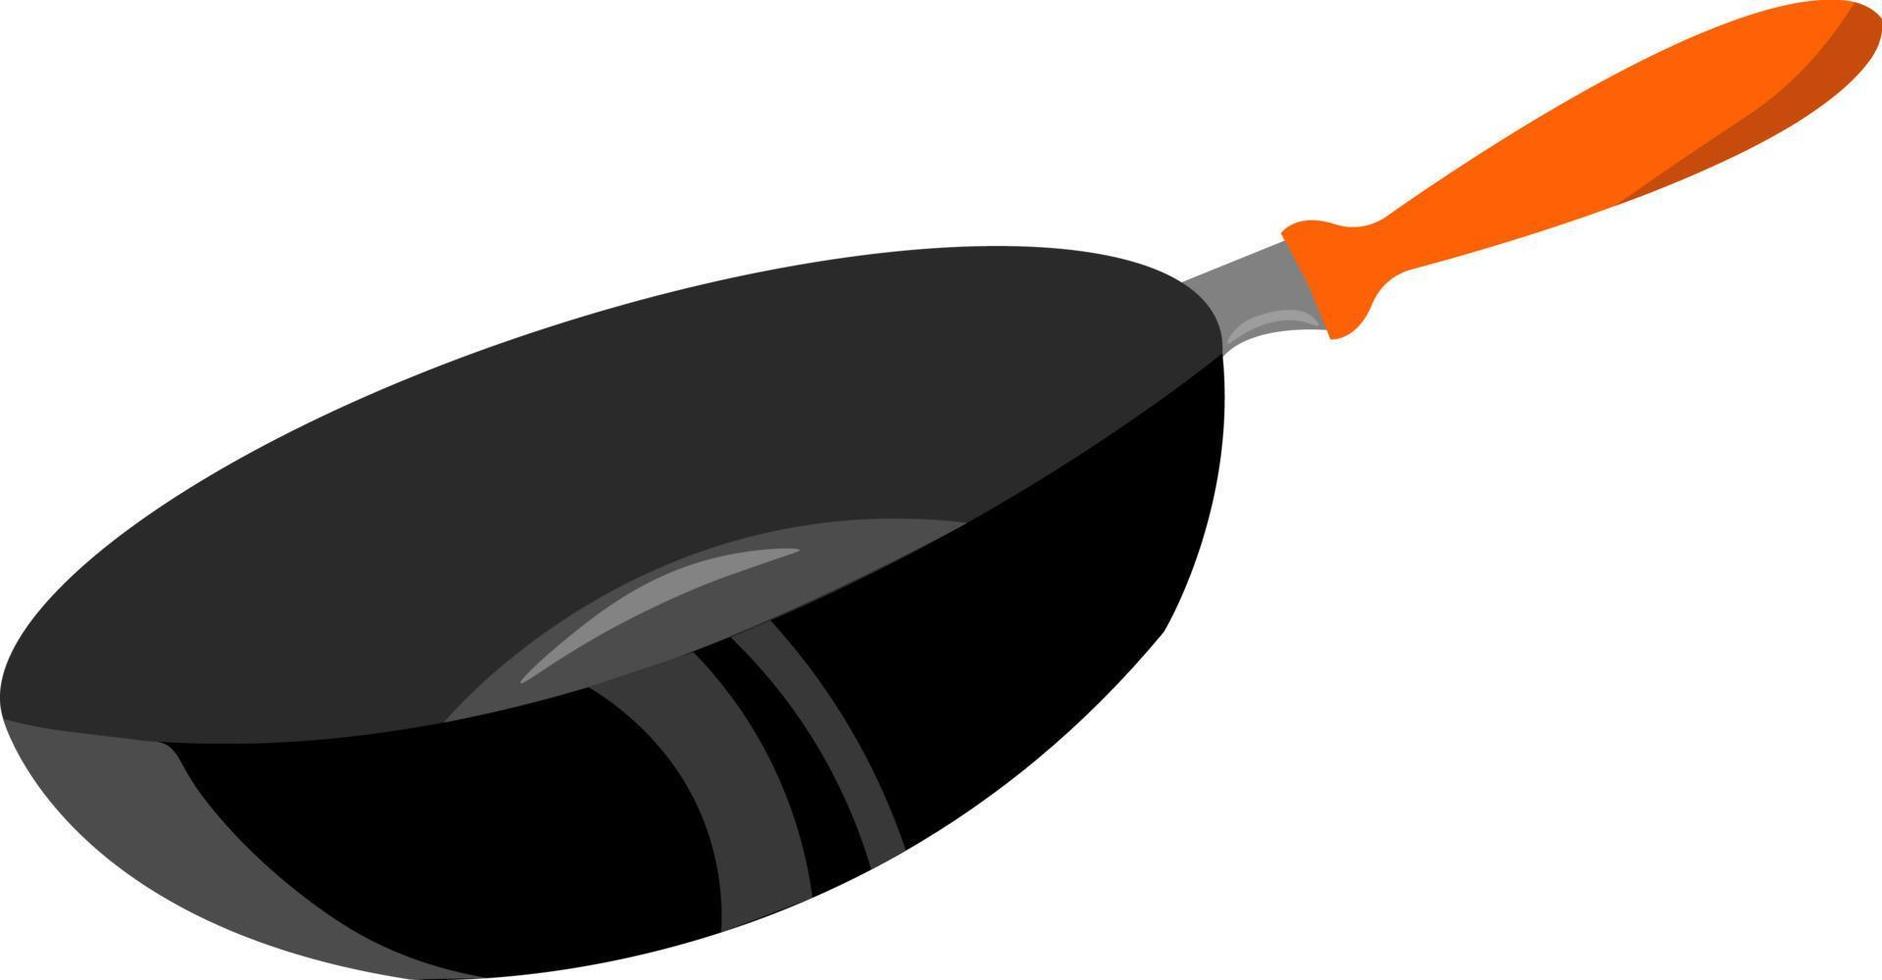 Frying pan, illustration, vector on white background.